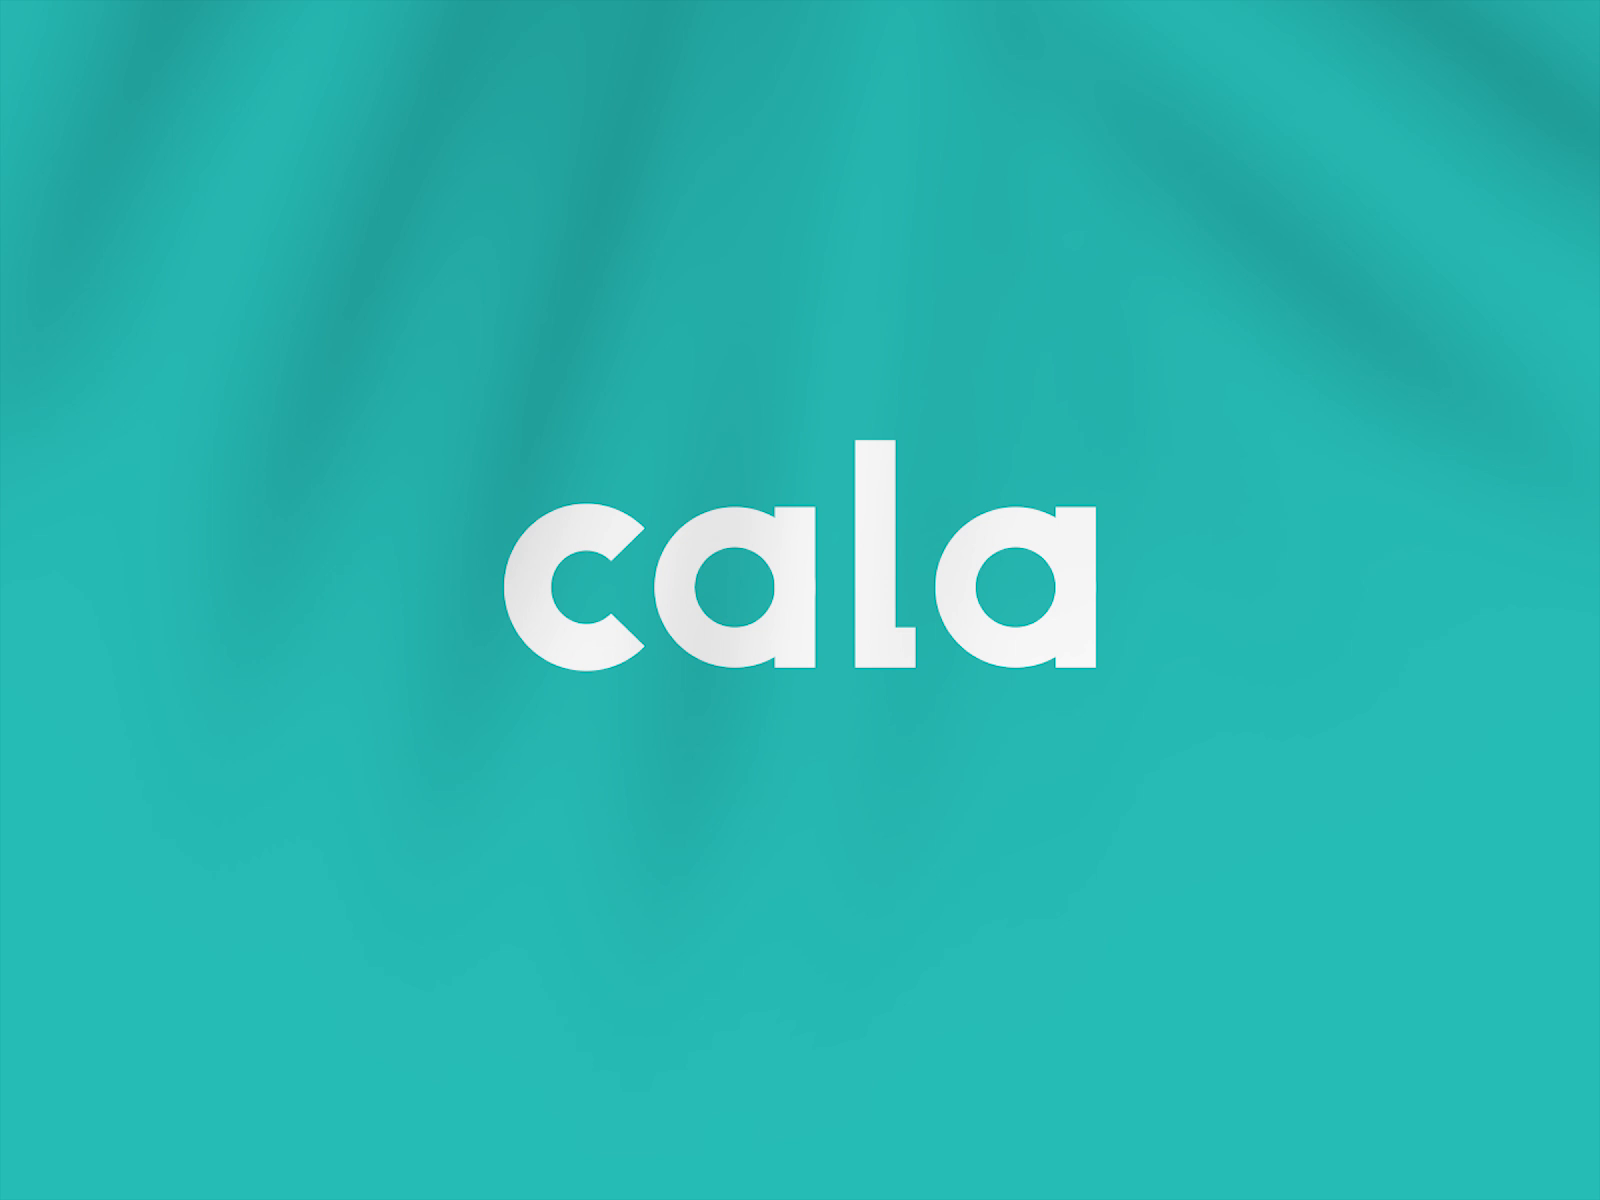 Cala Ai Wallet App Branding by Dede Dwiyansyah for Sobat.io on Dribbble